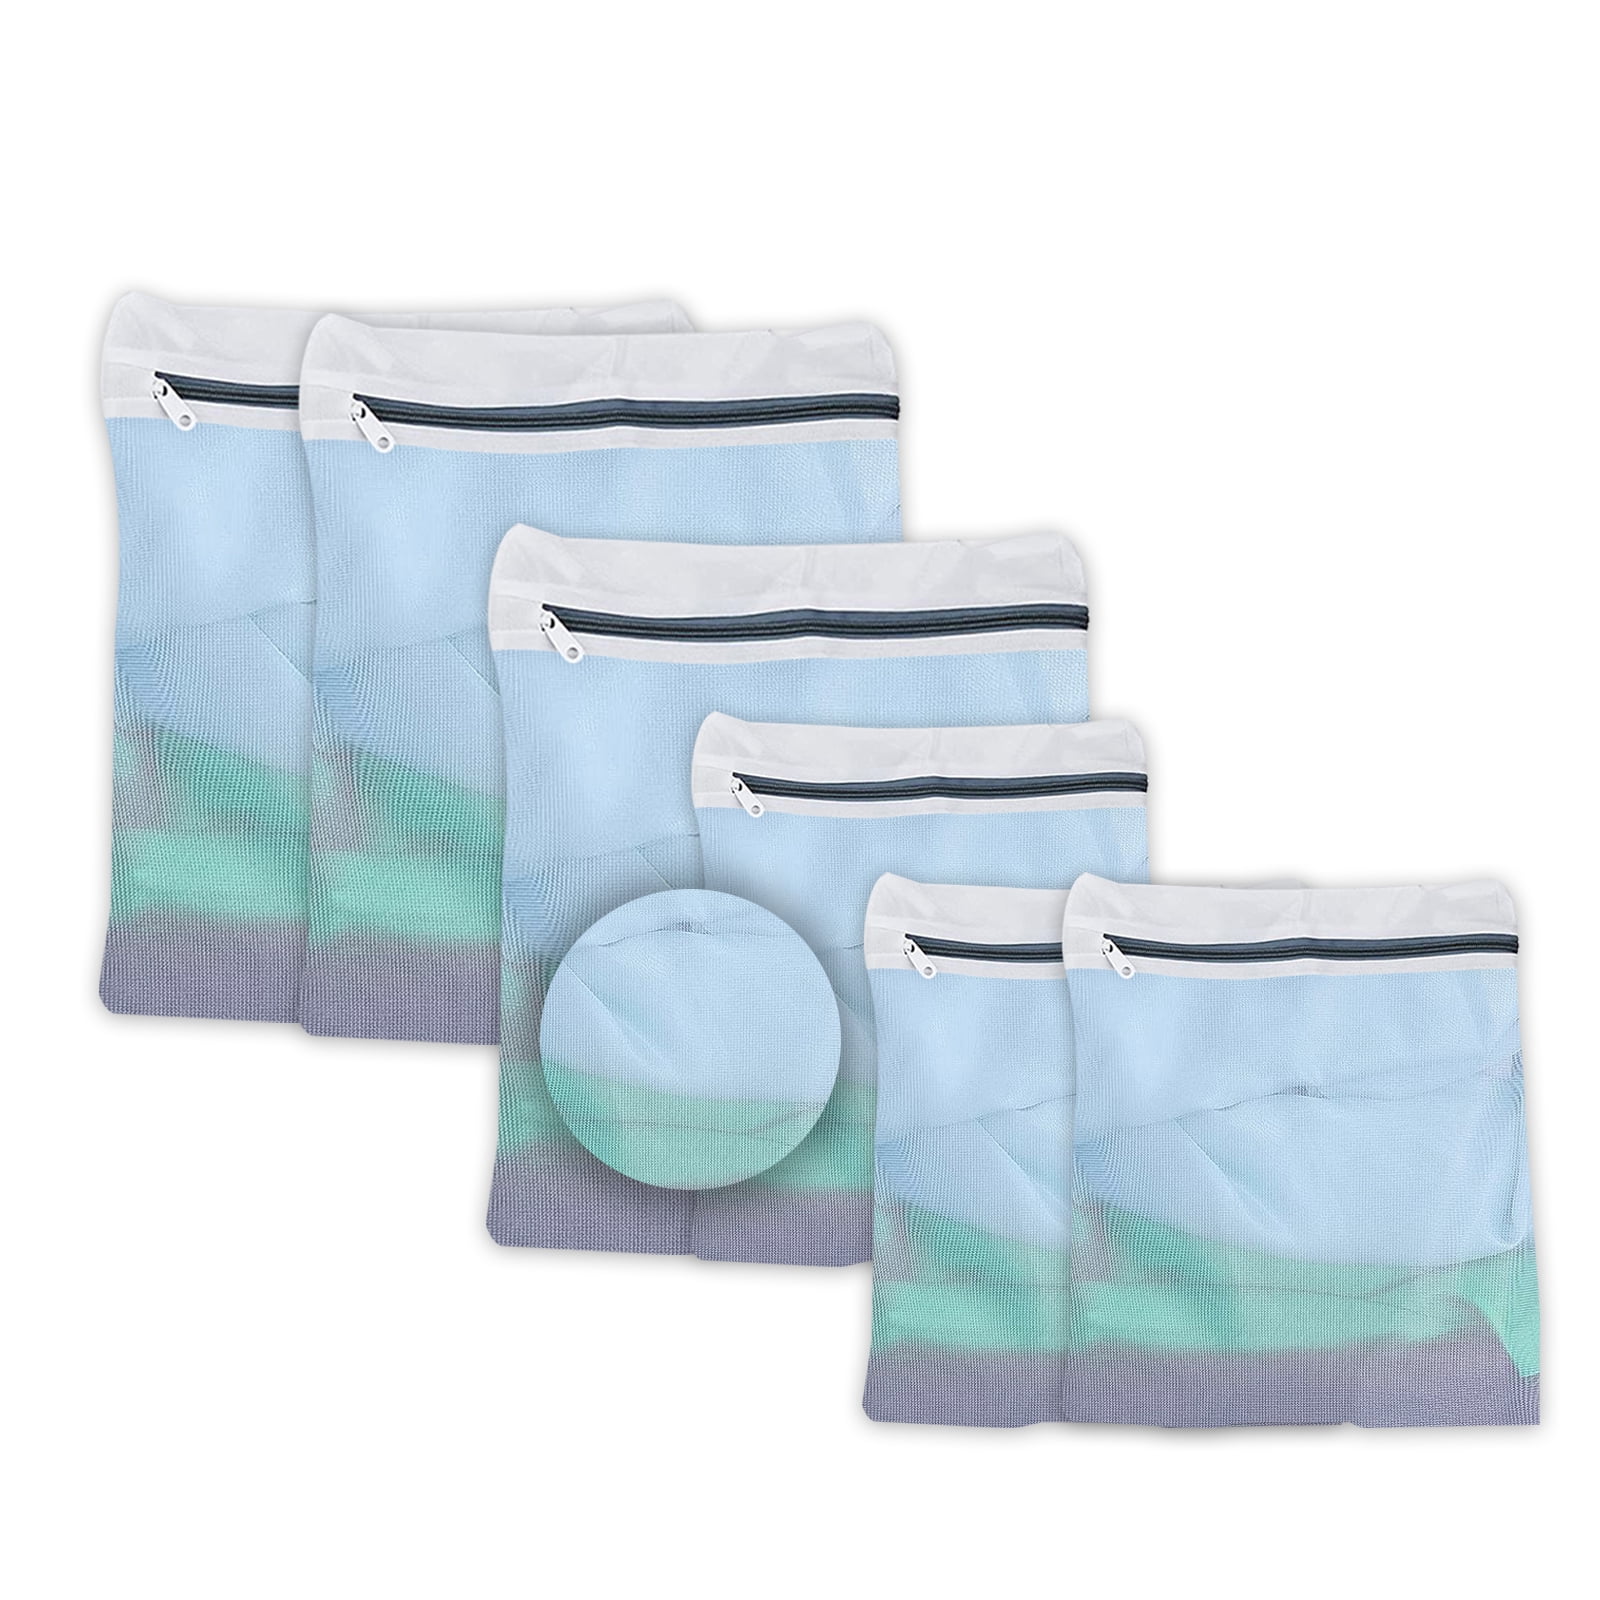 Durable Mesh Wash Laundry Wash Bag with Premium Zipper Suitable for Blouse Knit 